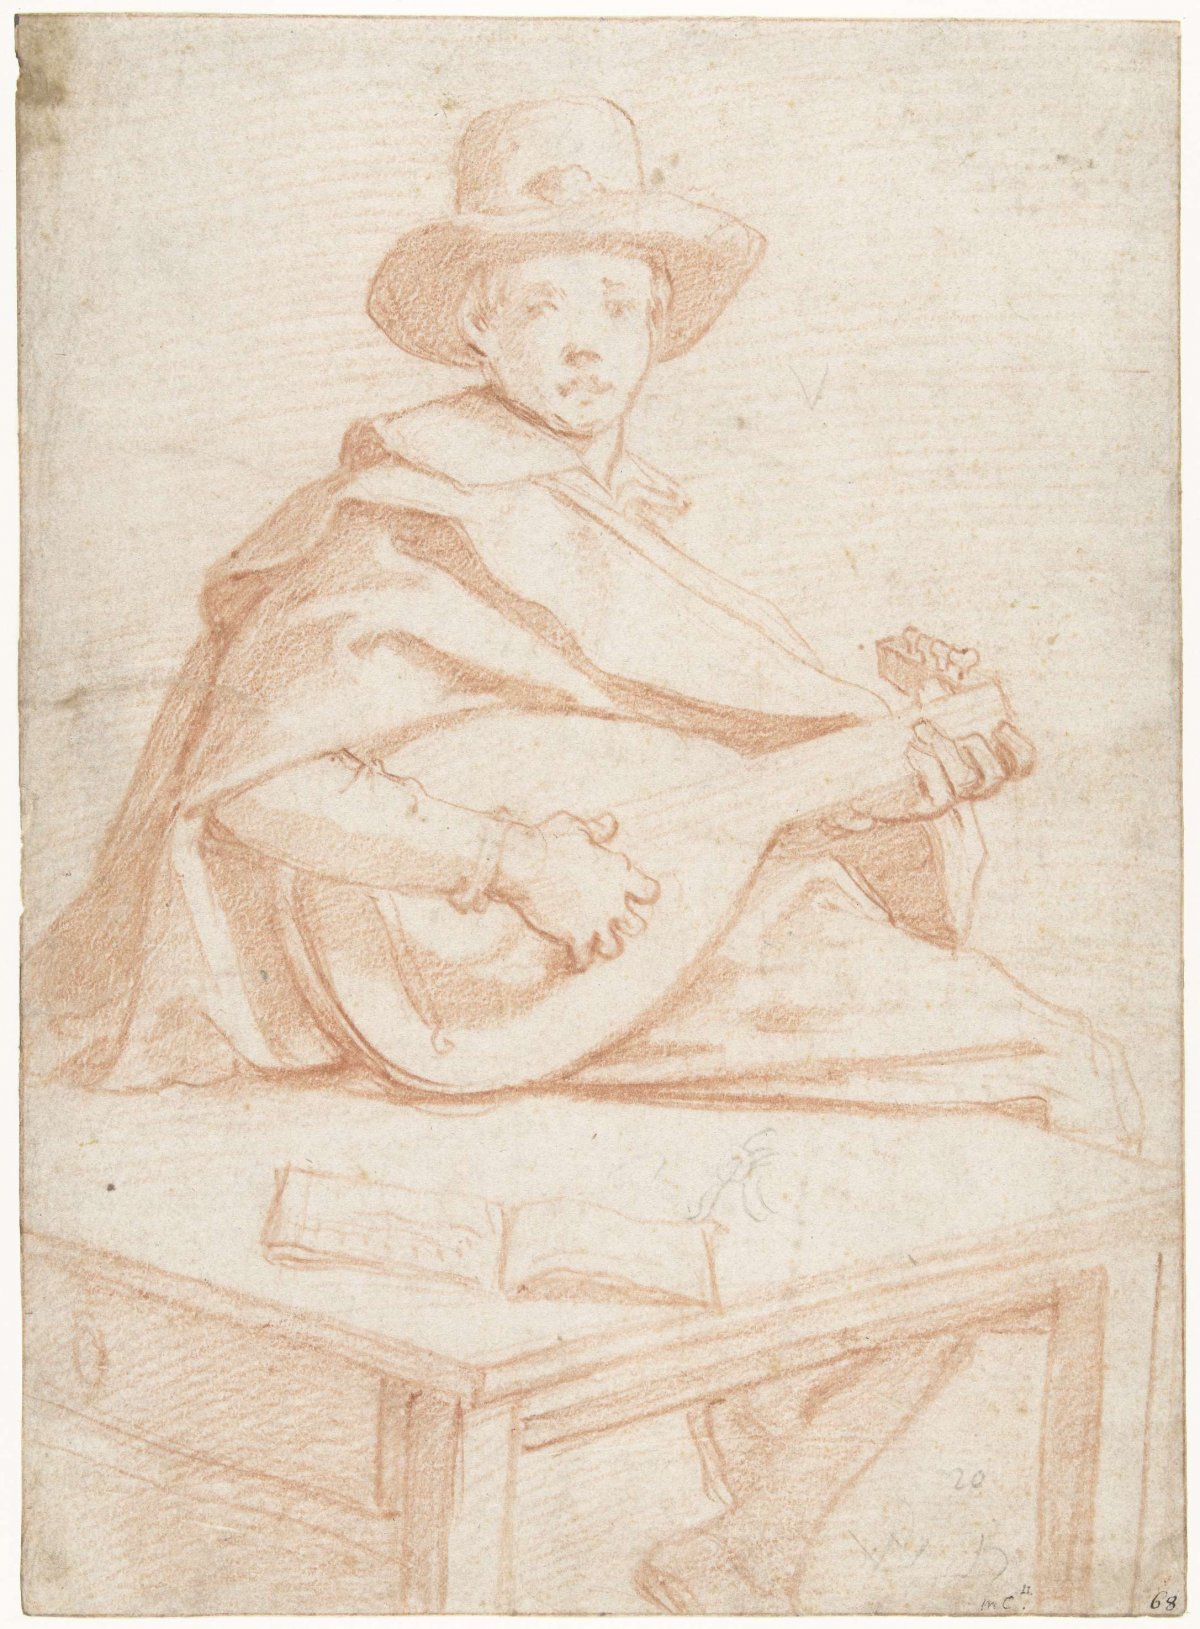 A lute player, Jacopo da Empoli, 1561 - 1640